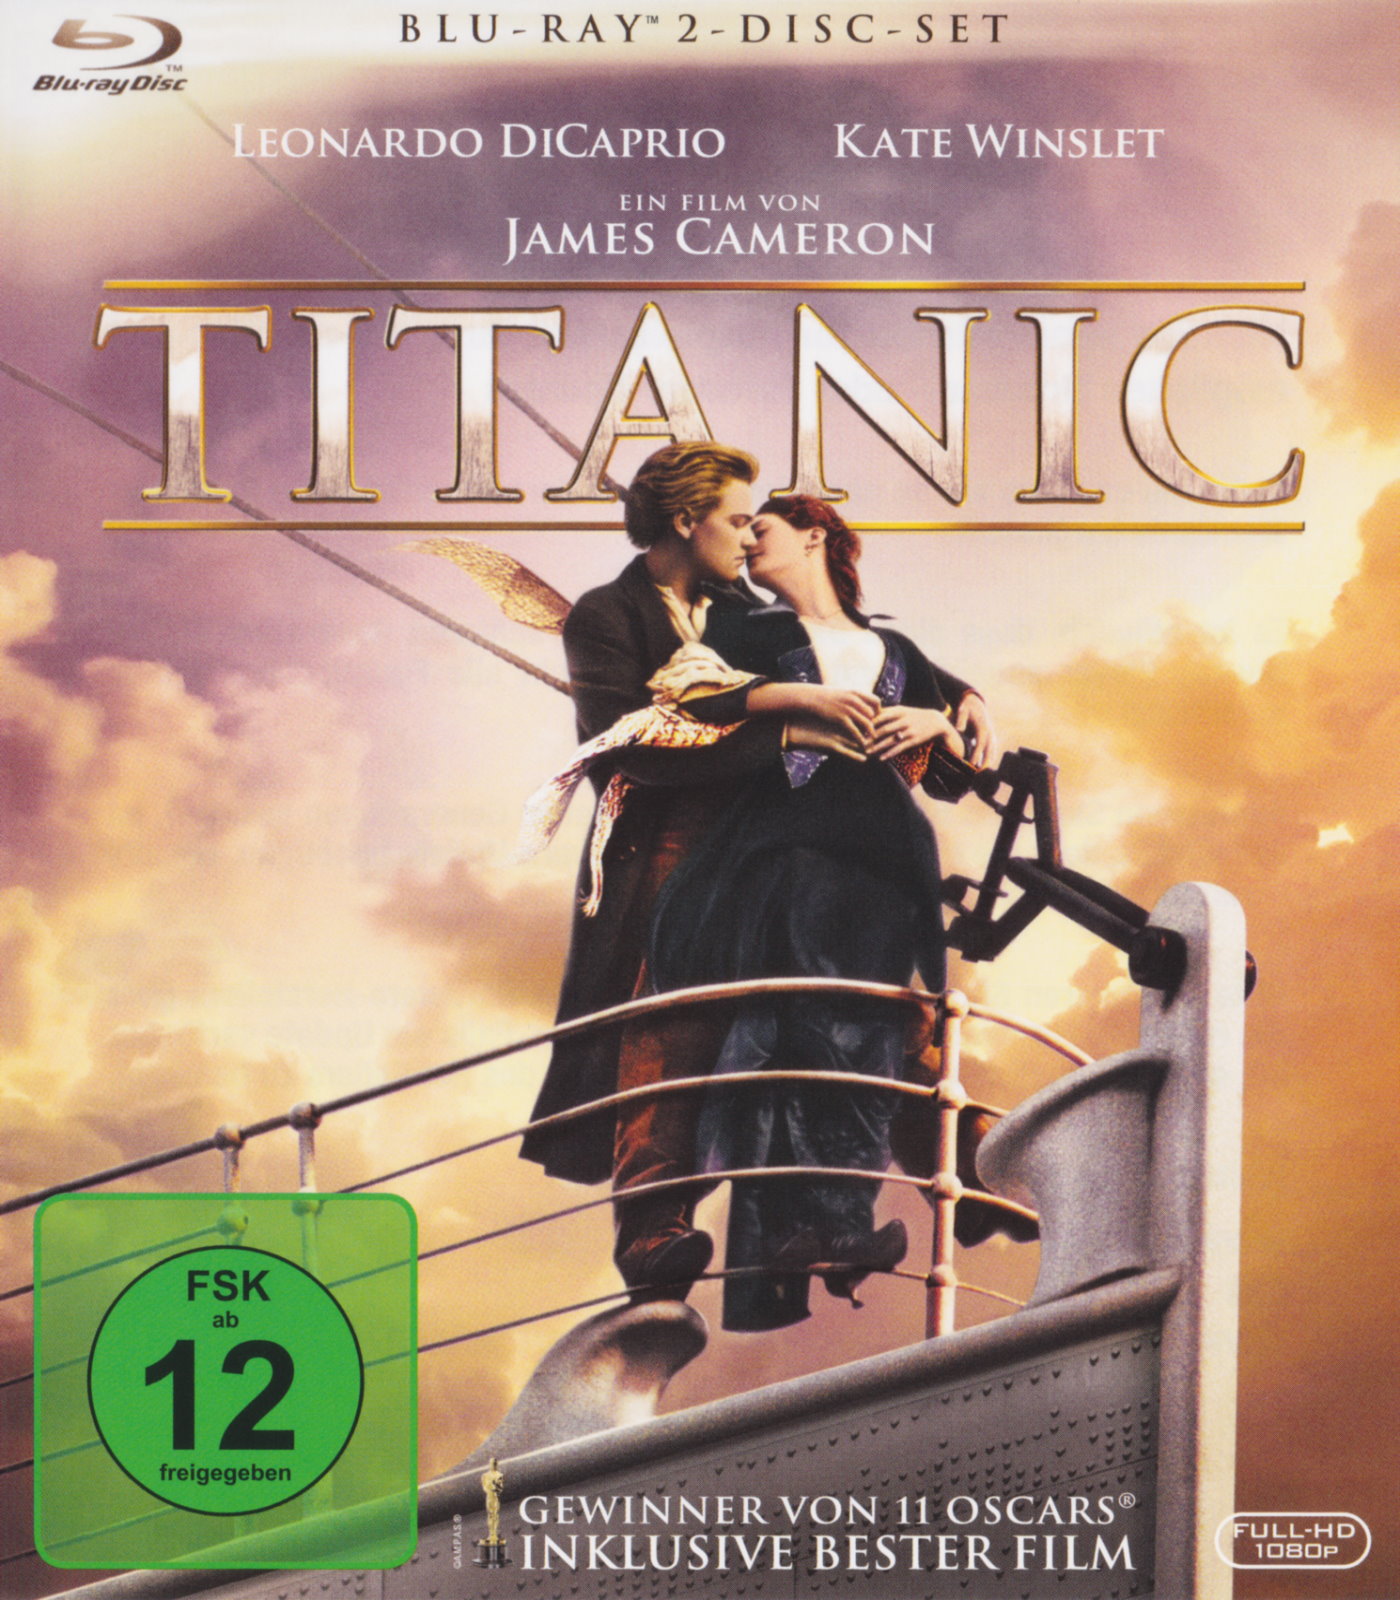 Cover - Titanic.jpg